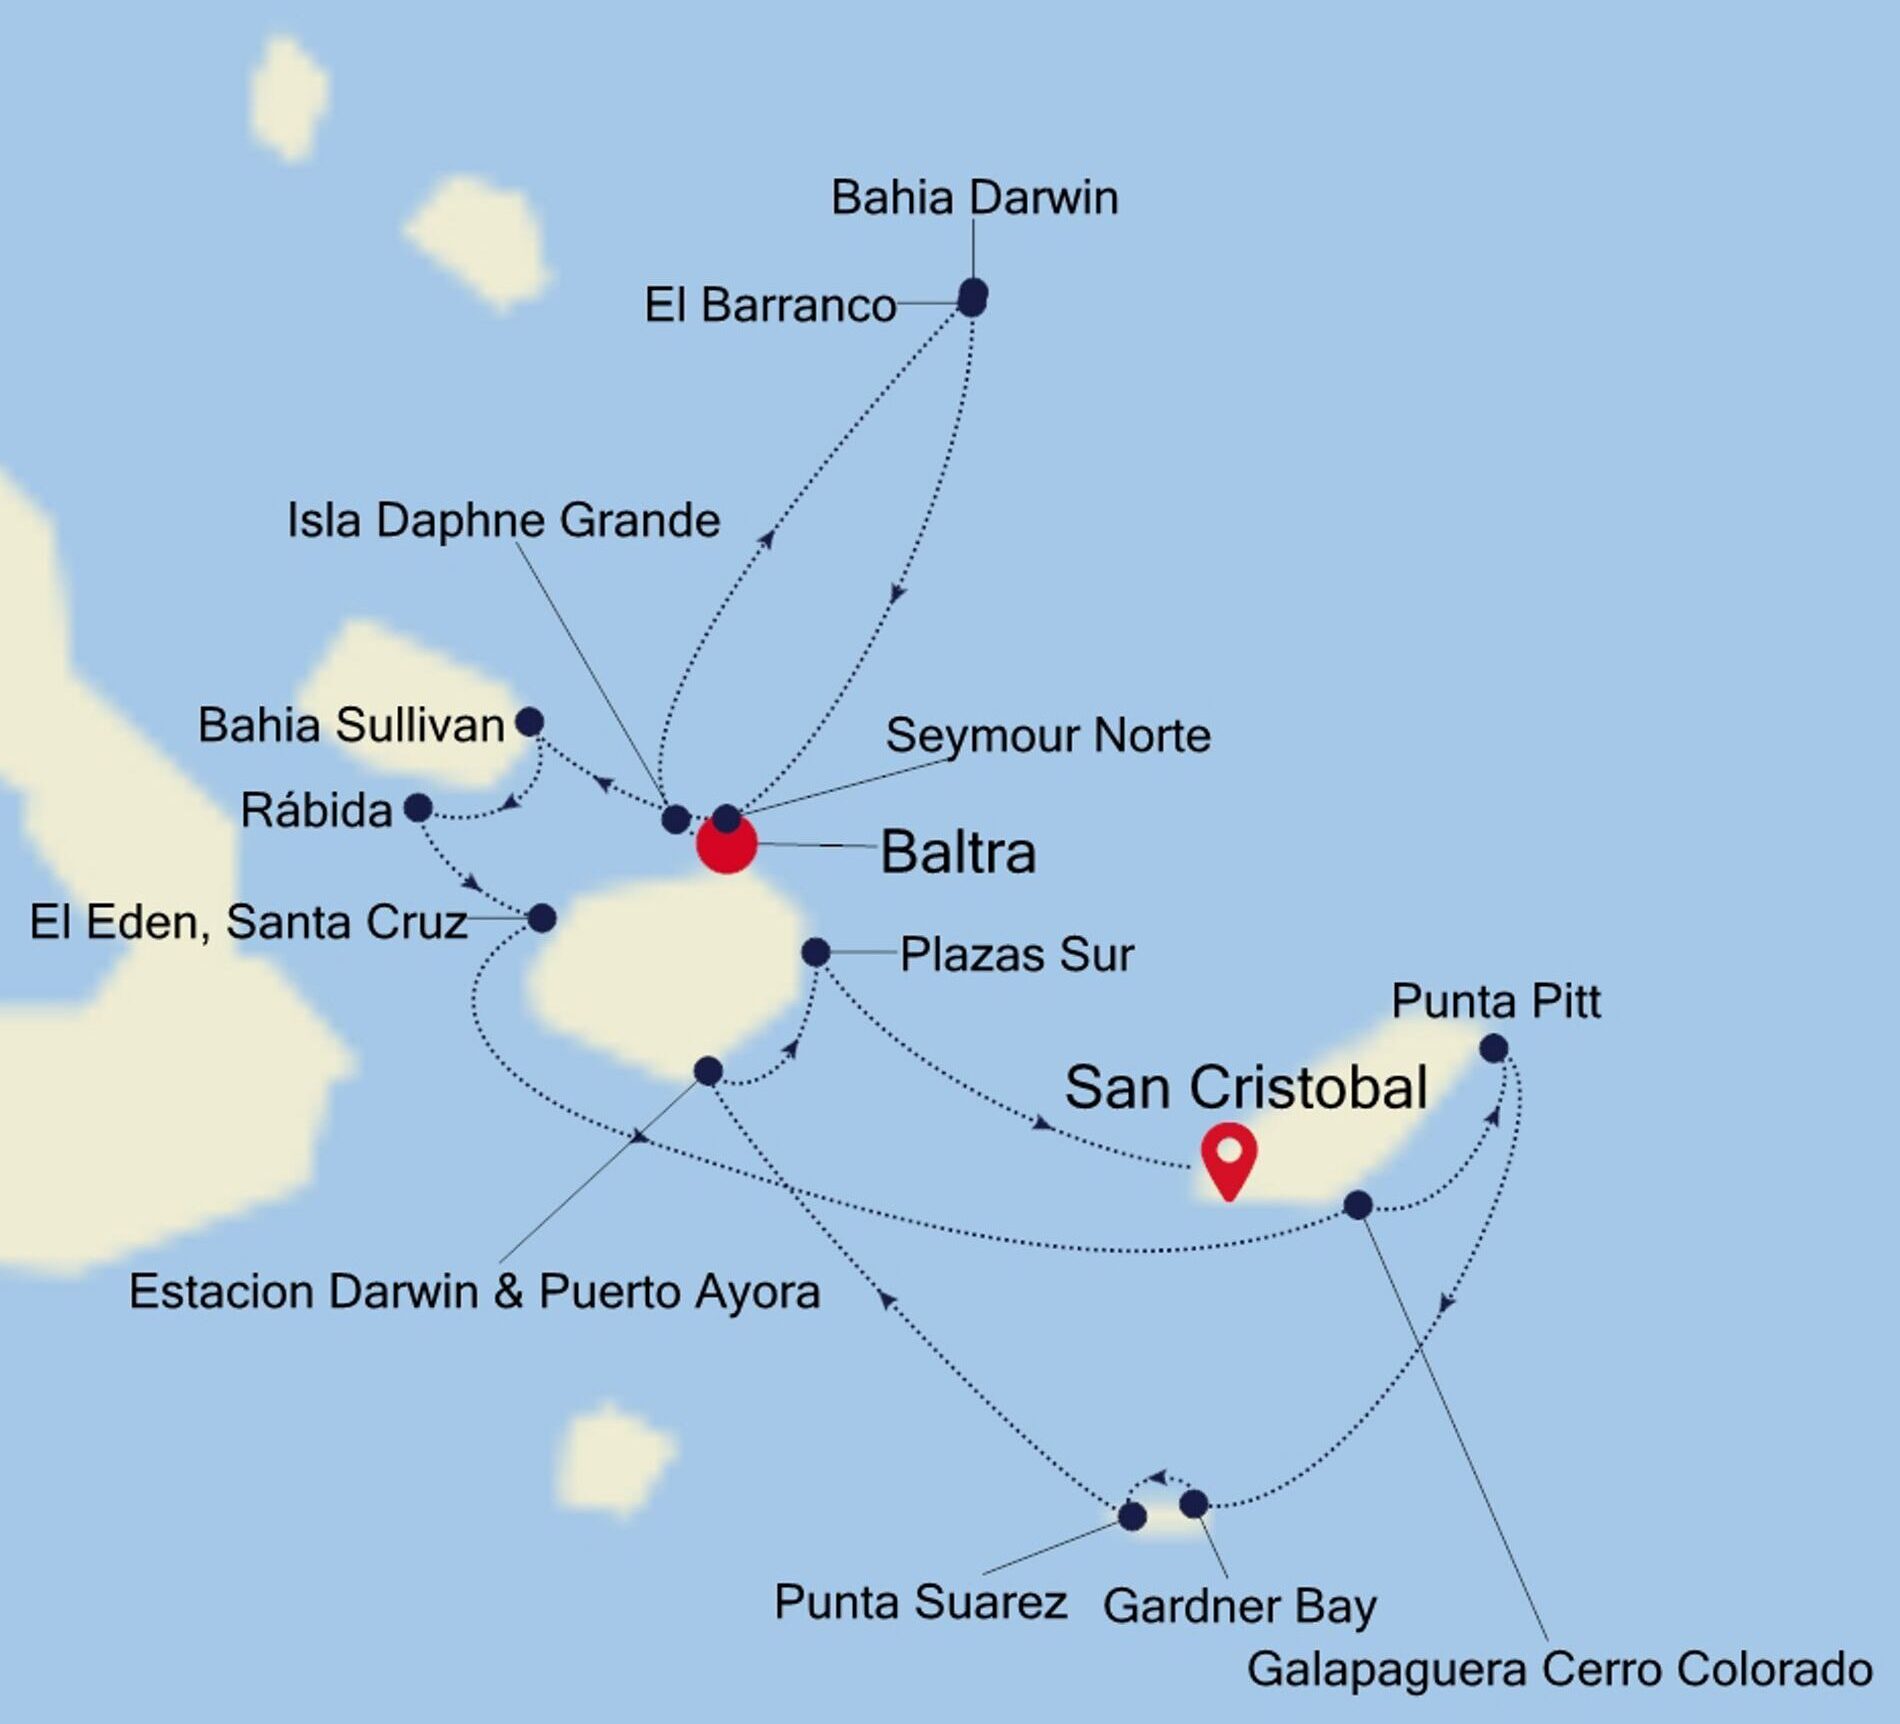 Sejlrutekort Galapagos Øerne med Silversea Expeditions